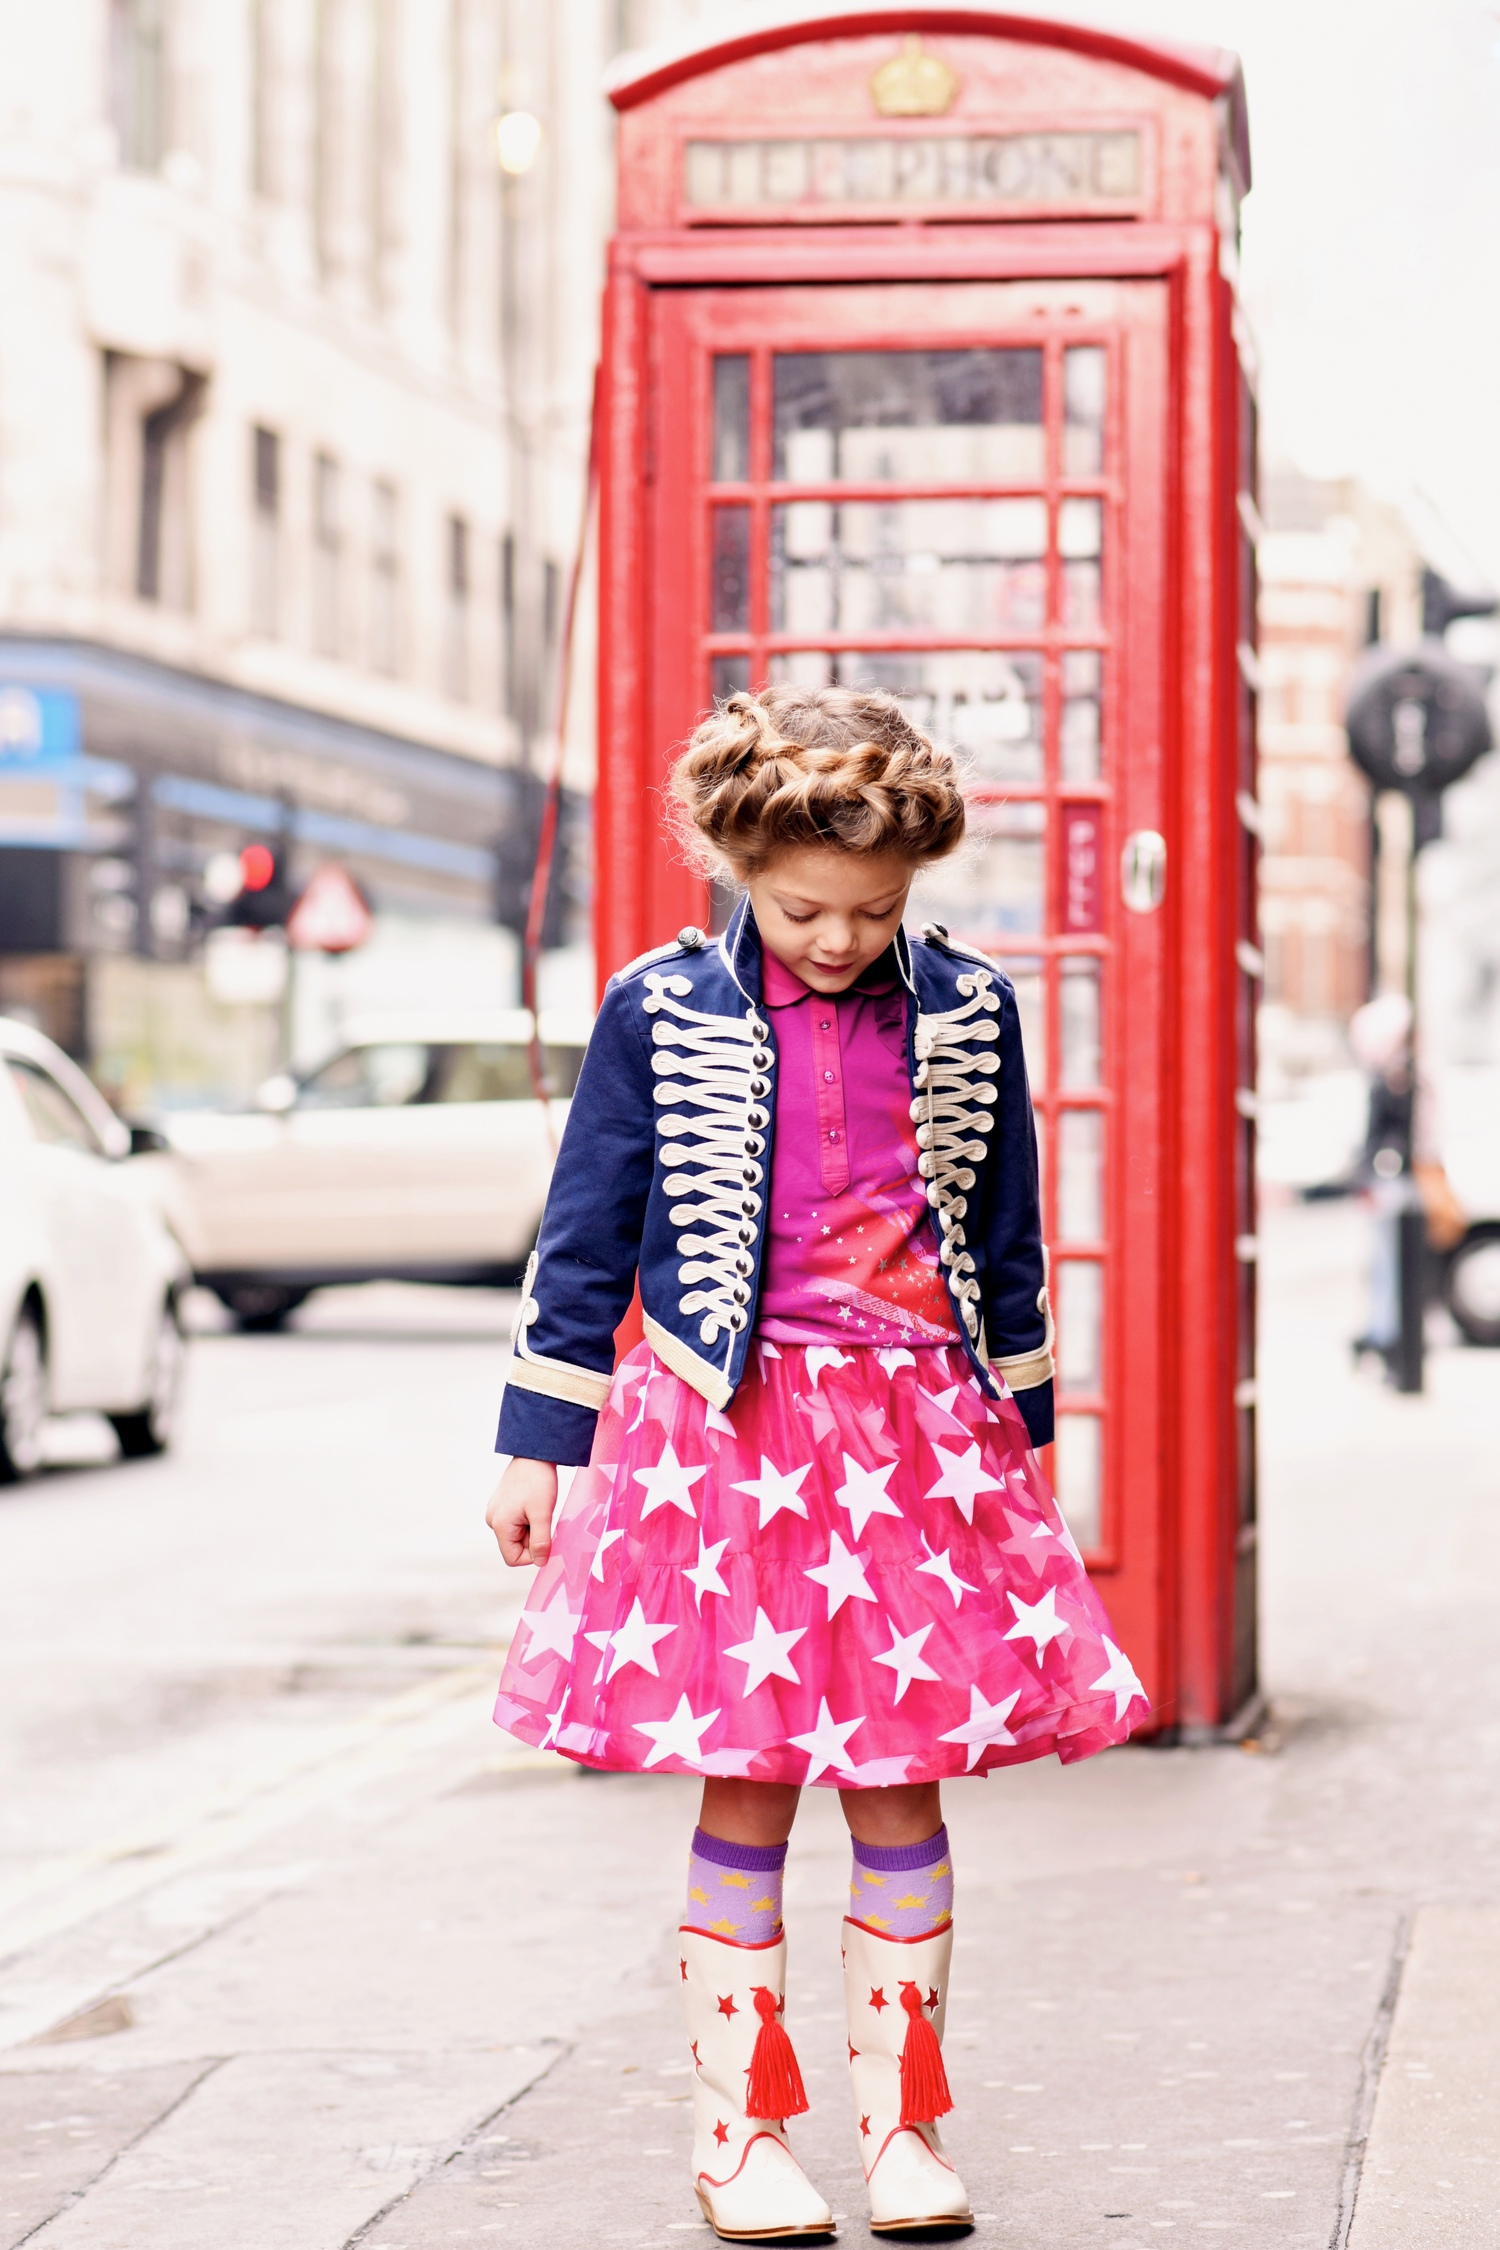 Enfant+Street+Style+by+Gina+Kim+Photography-4.jpeg